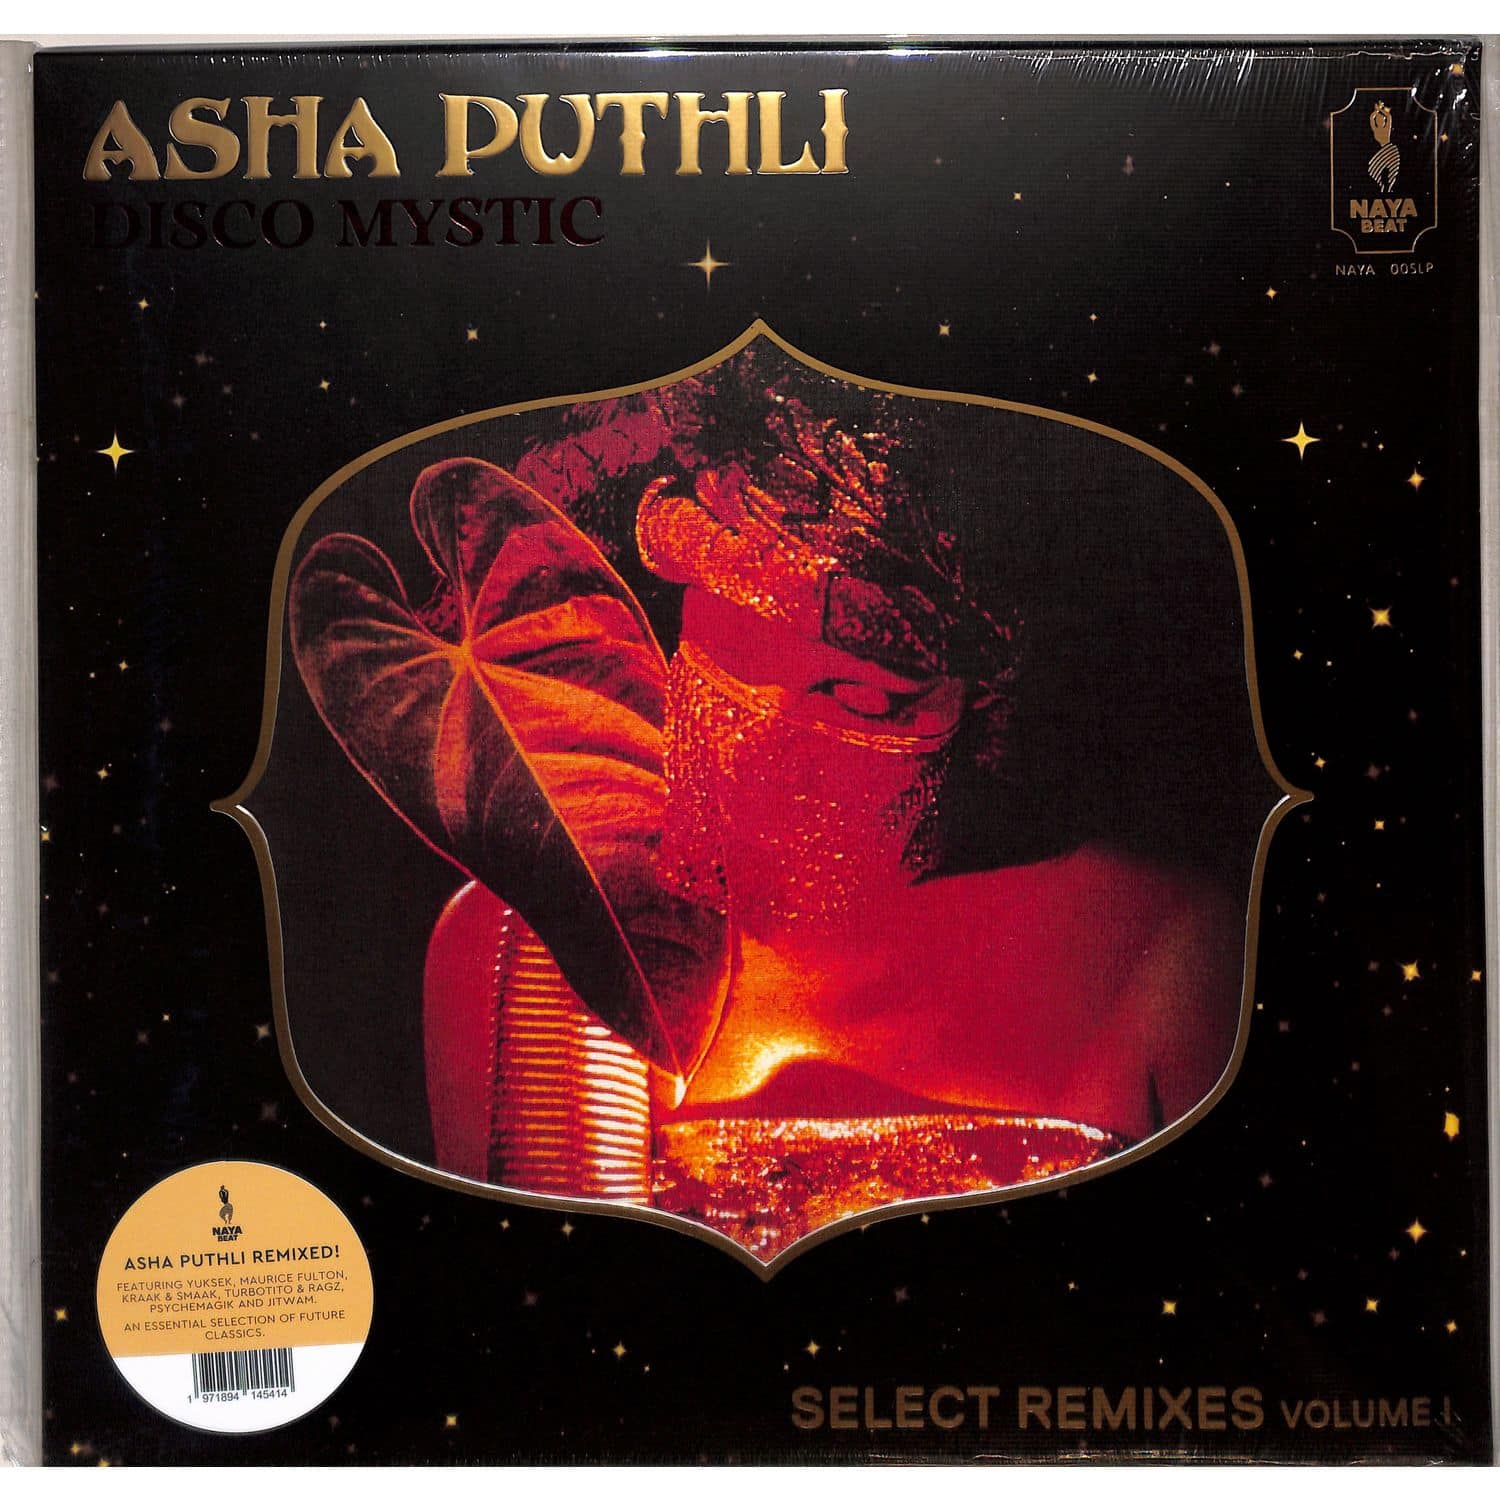 Asha Puthli - DISCO MYSTIC: SELECT REMIXES VOLUME 1 